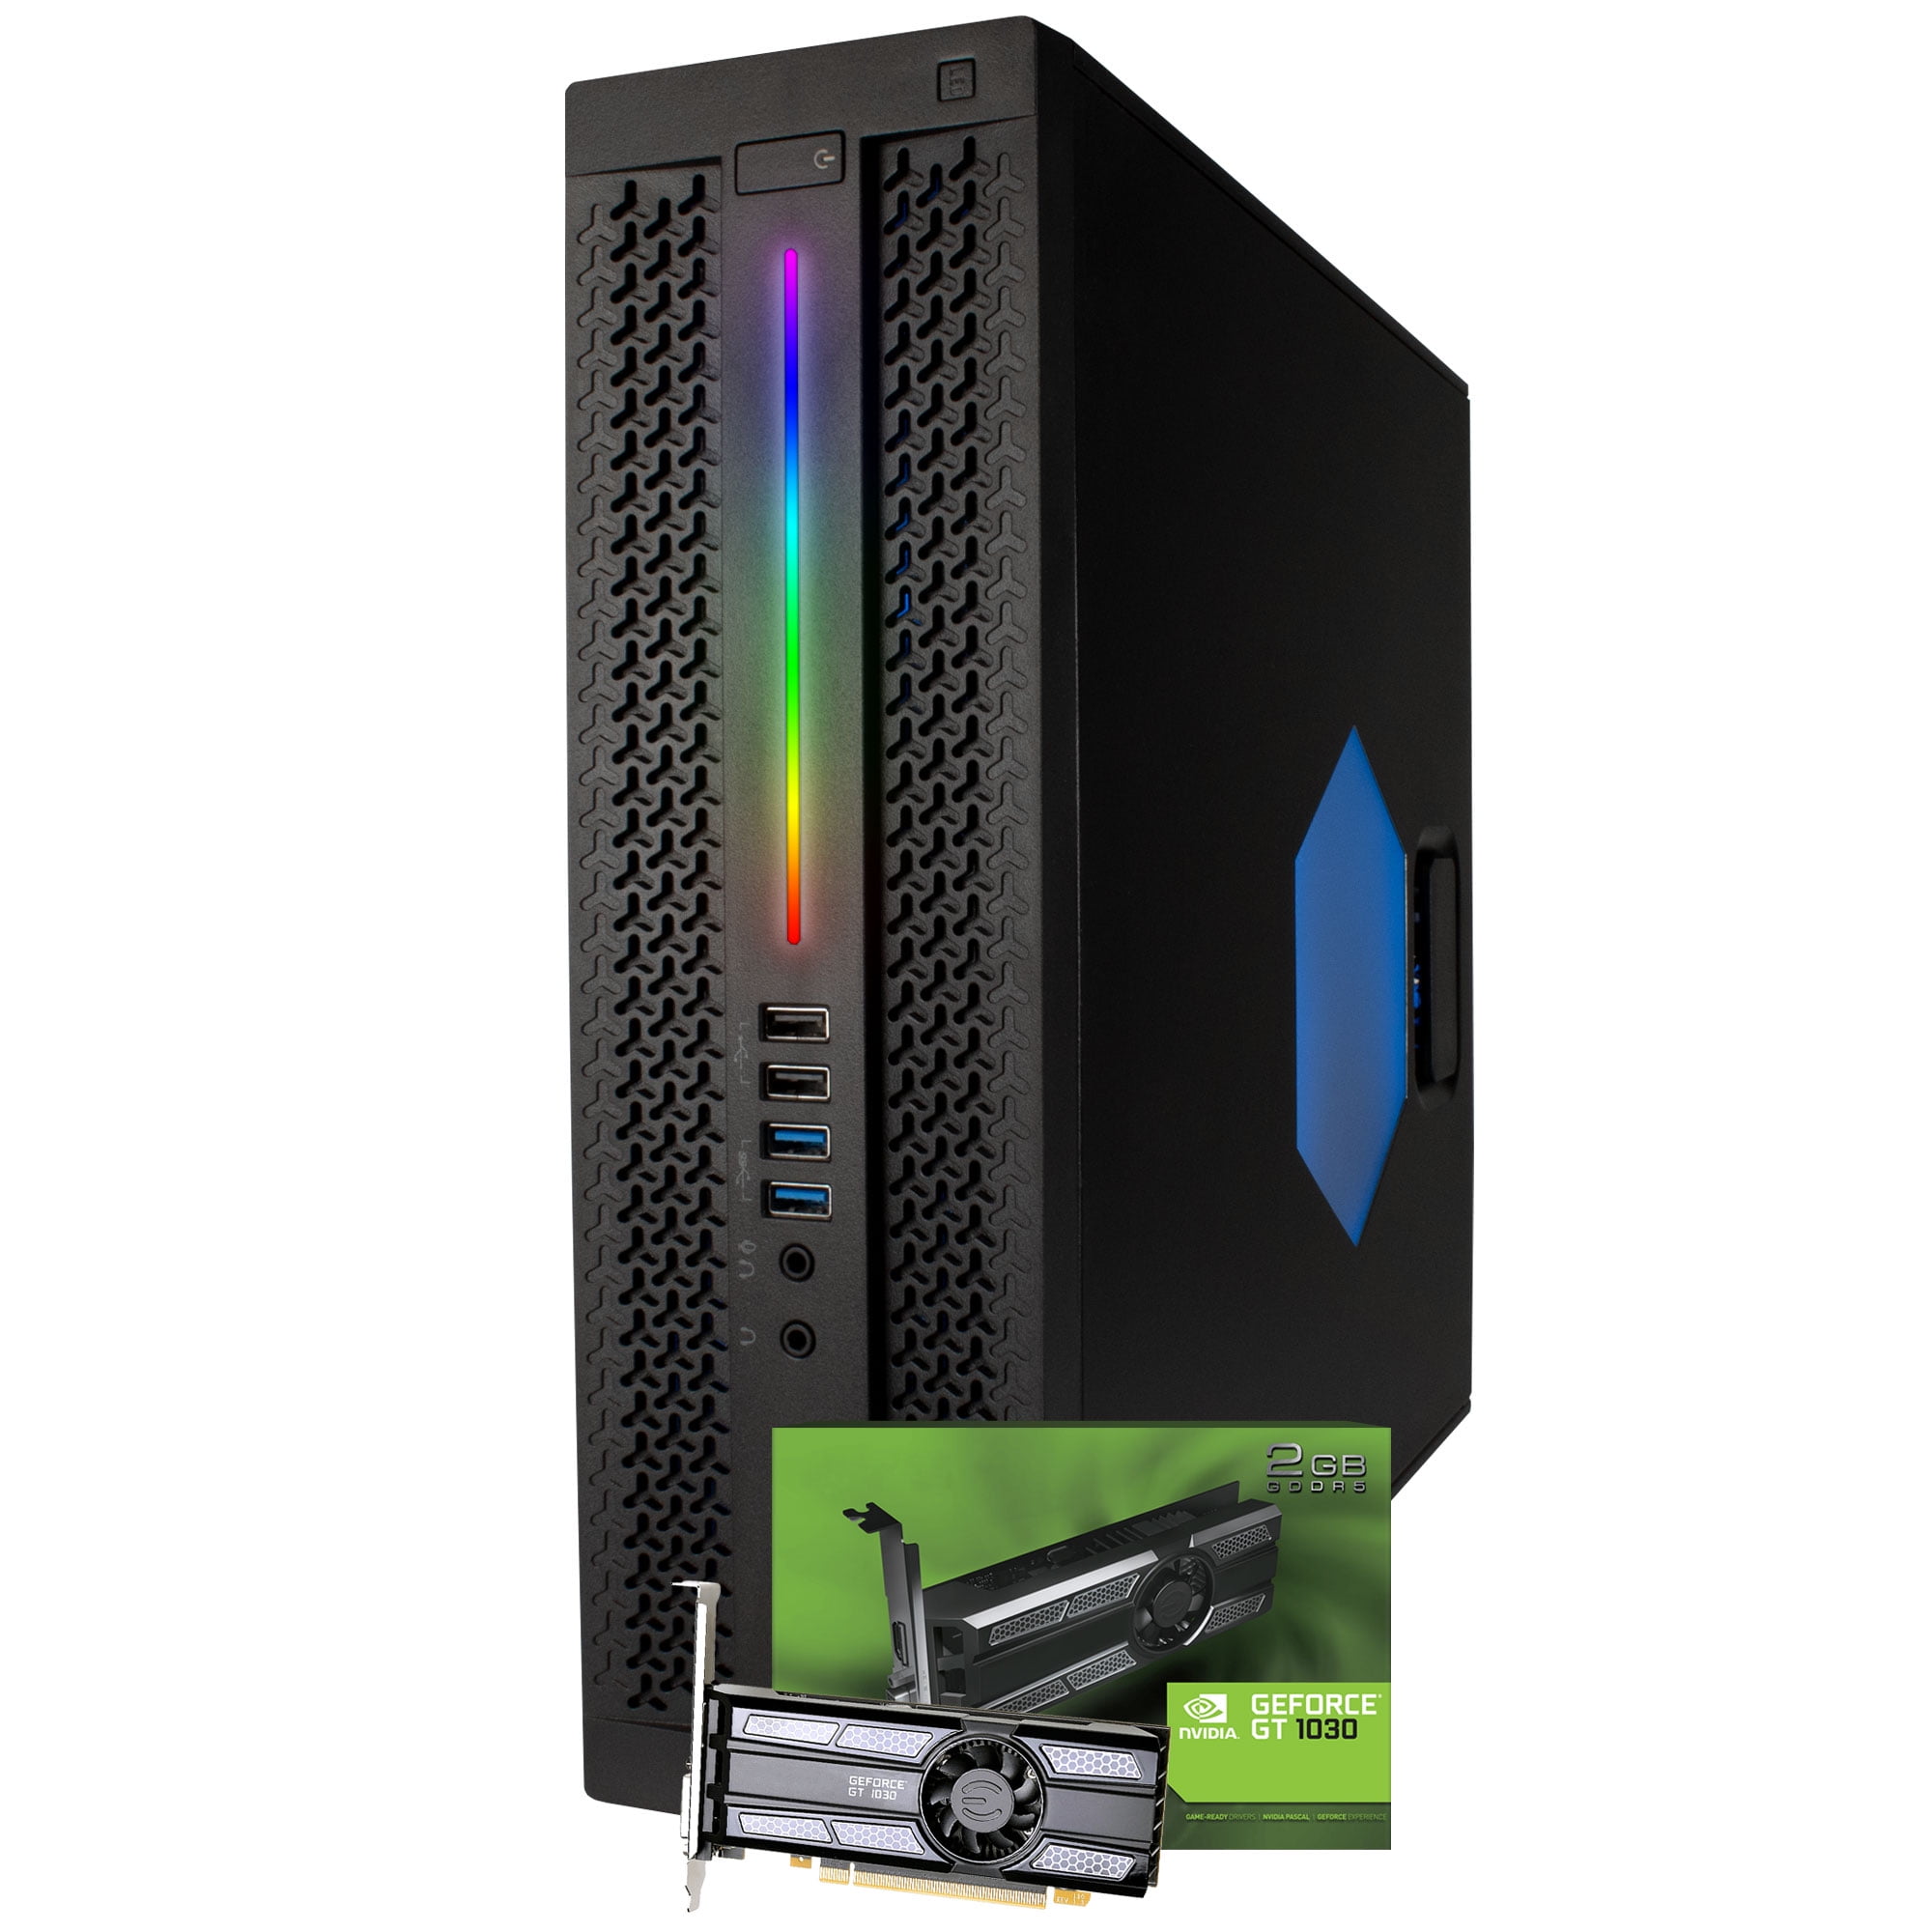 HP Elite RGB Desktop Computer Intel Quad Core i5 (3.6Ghz Turbo) | GeForce GT (2GB) GPU | 16GB DDR4 | 500GB Solid State SSD + 1TB HDD